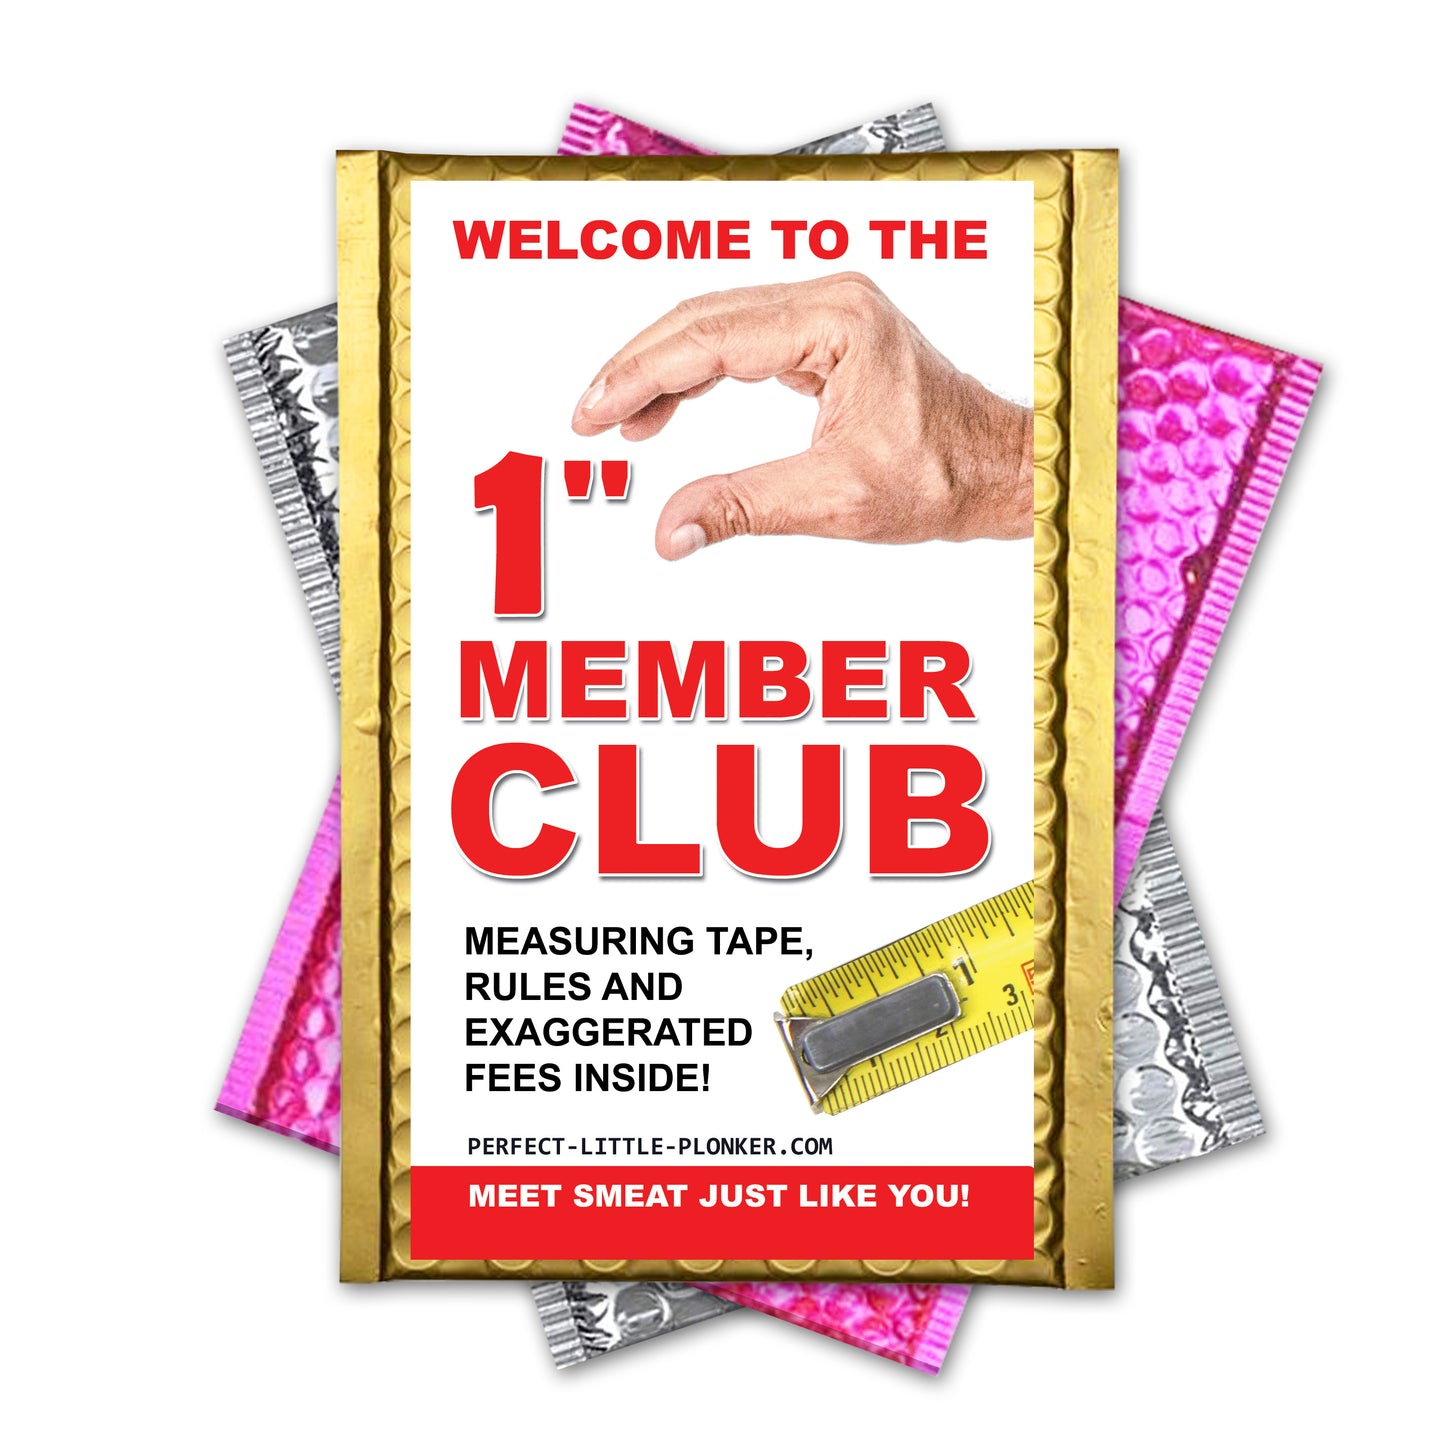 1 Inch Member Club Prank Mail